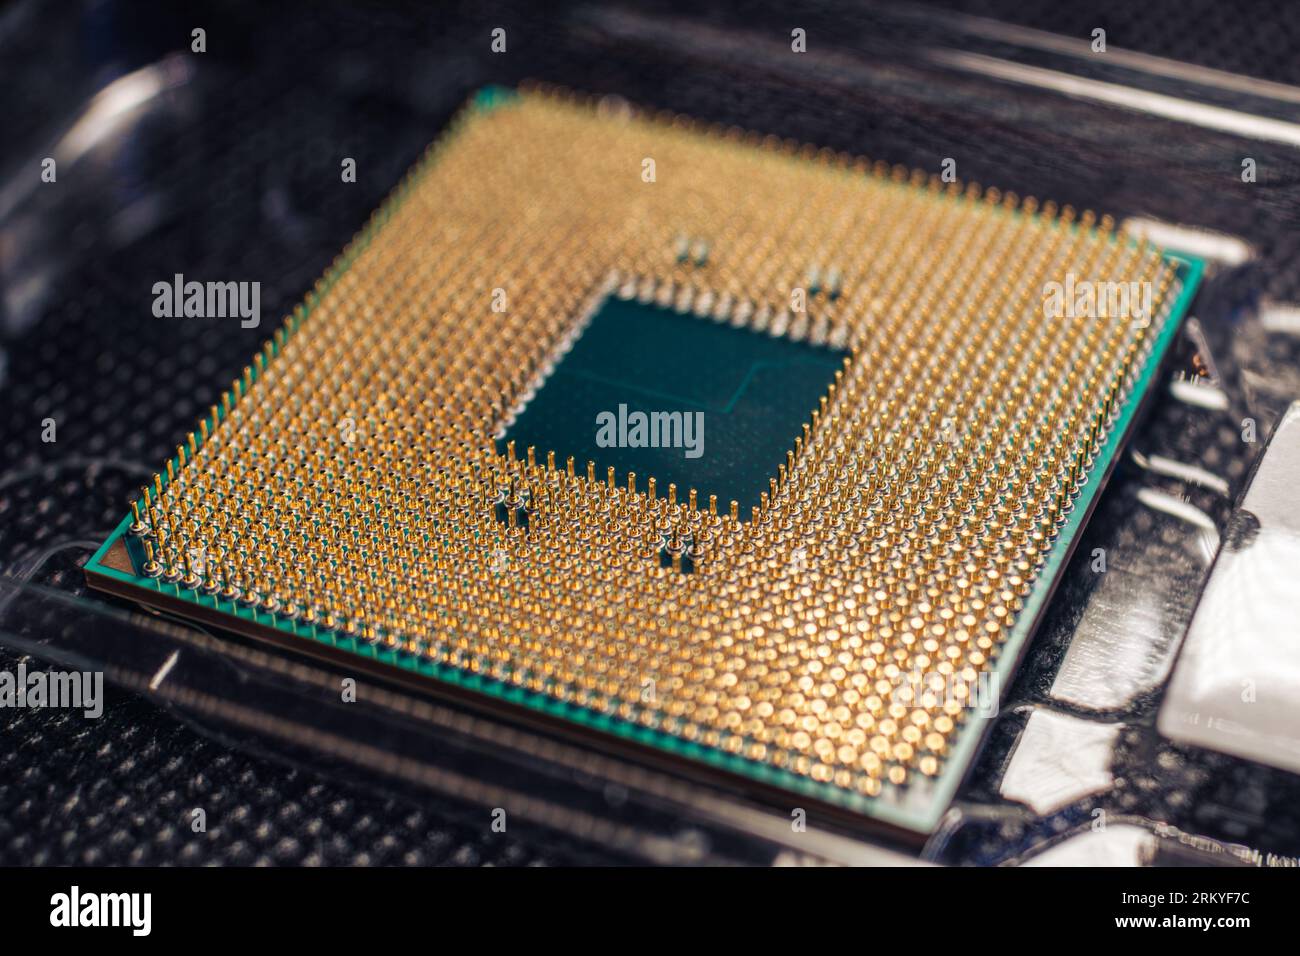 CPU microchip golden pins close-up. Desktop PC computing processor unit details with selective focus view Stock Photo